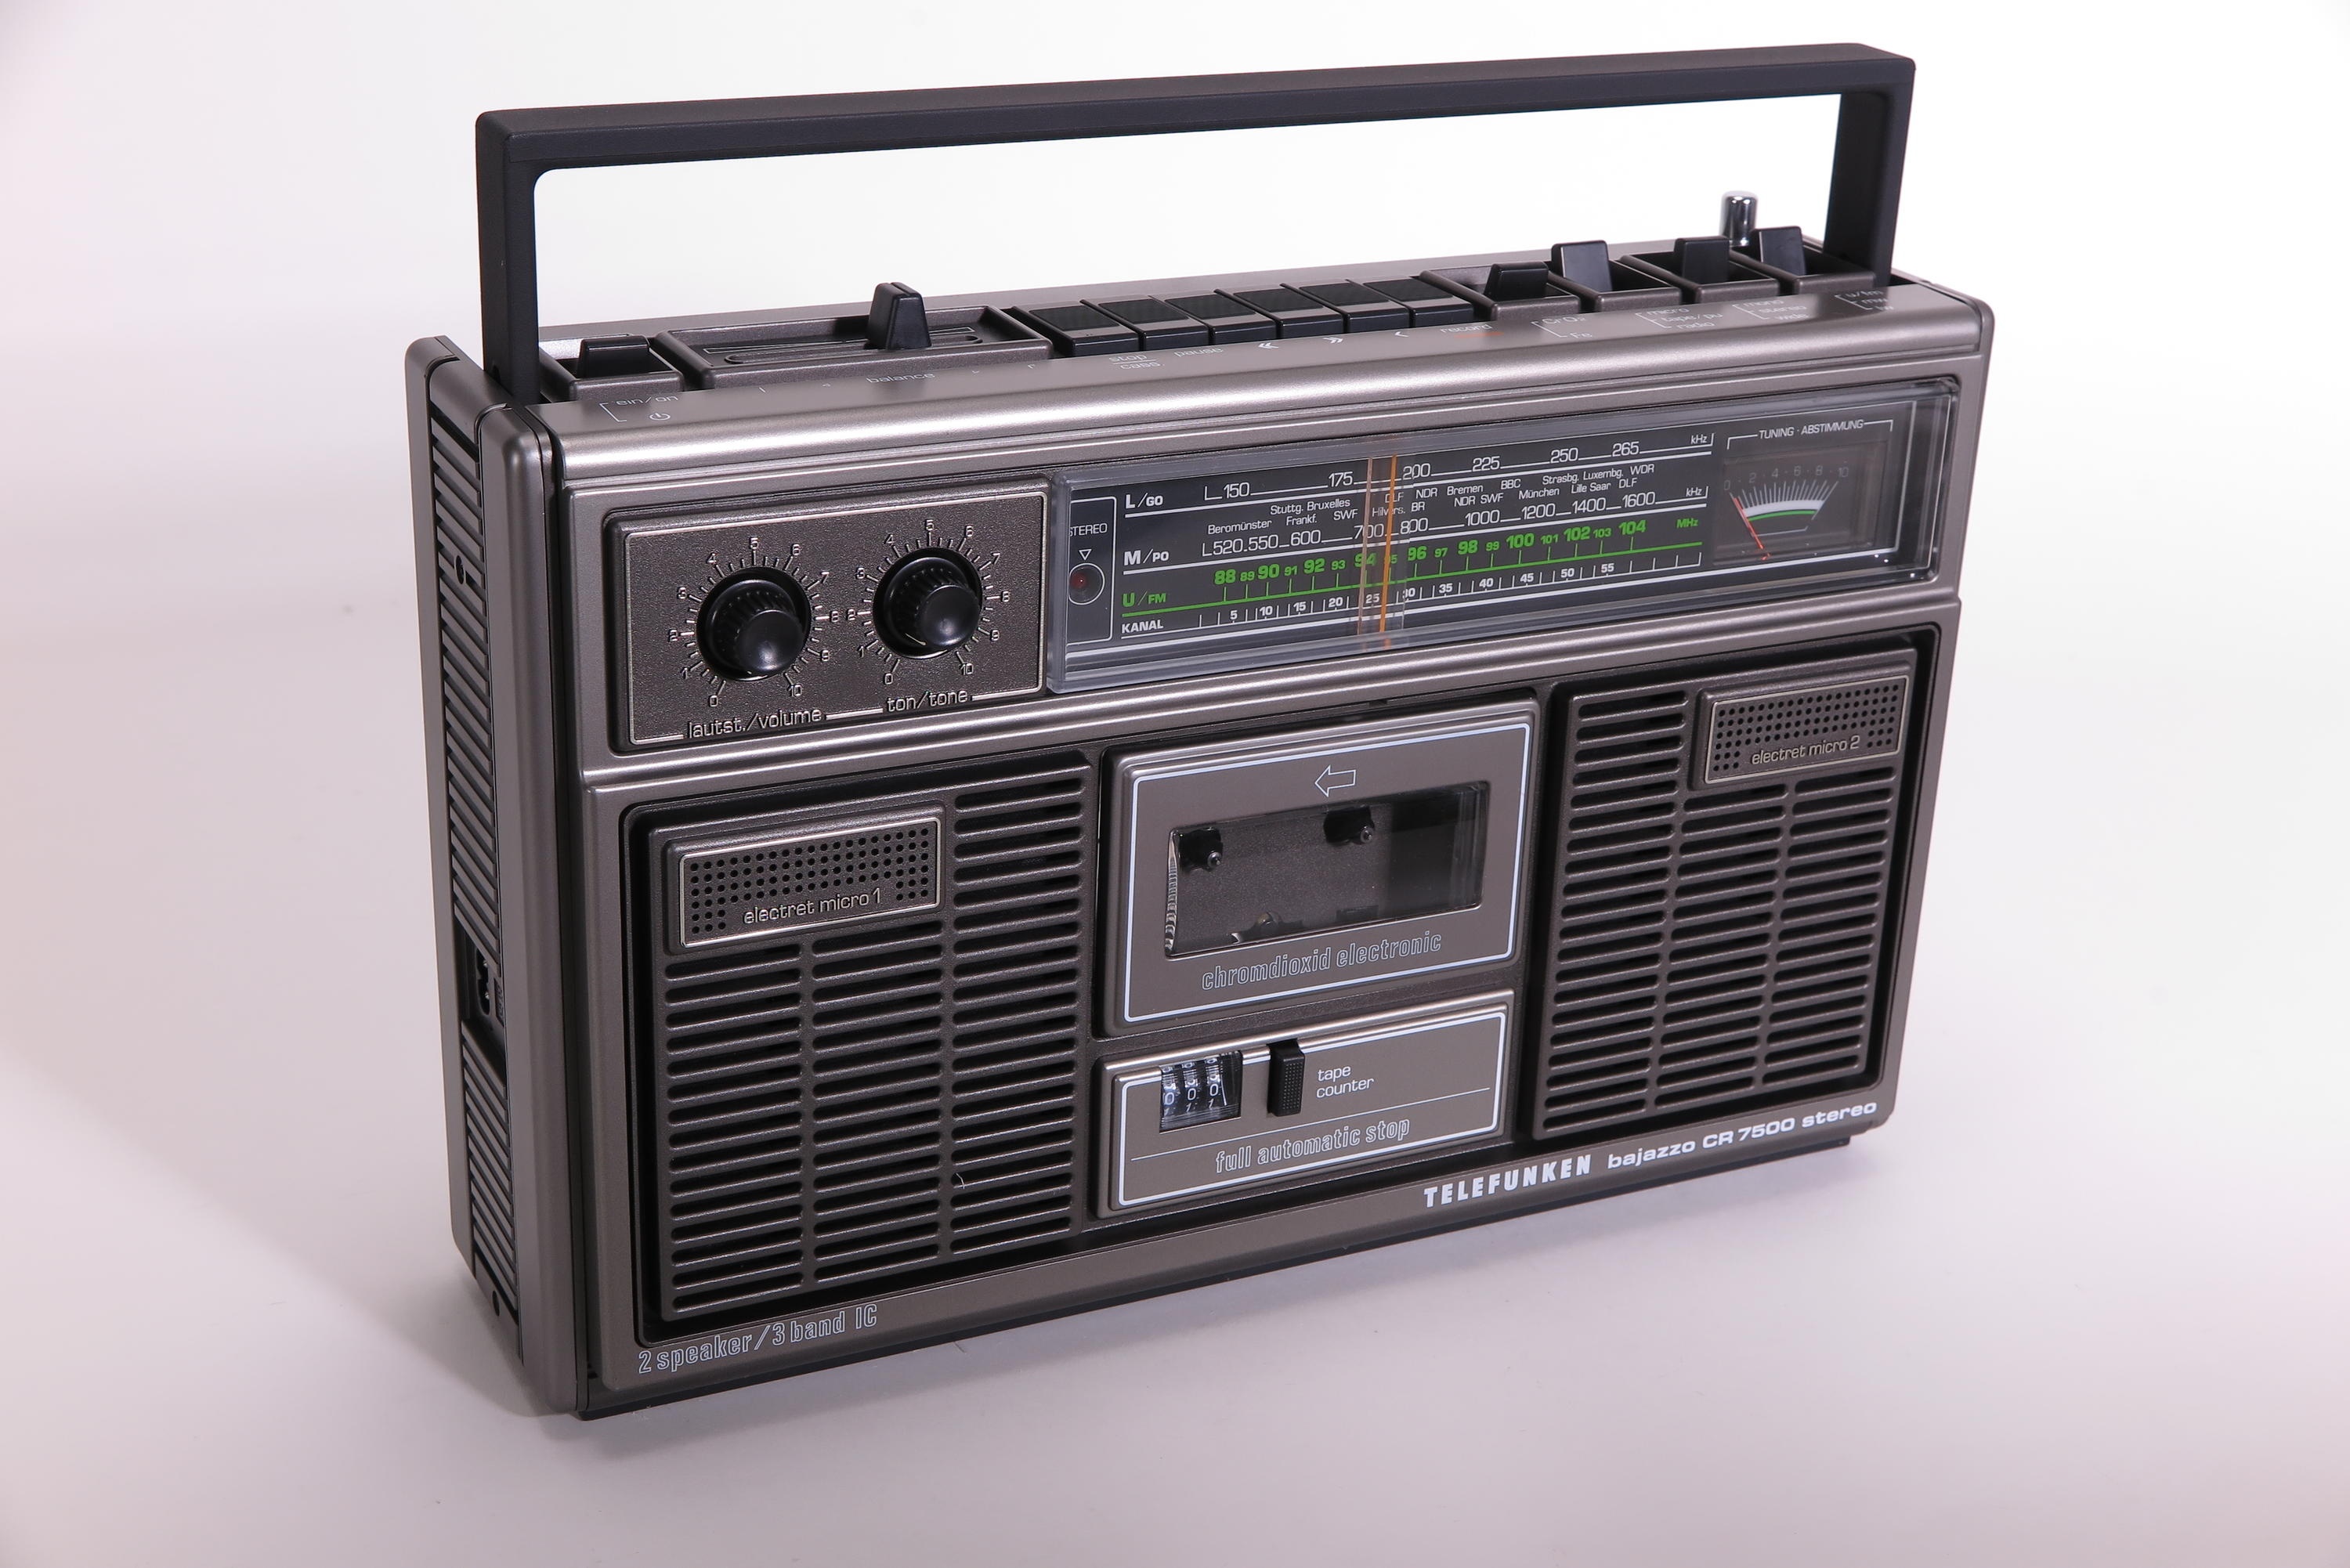 Kofferradio mit Kassettendeck Telefunken Bajazzo CR7500 Stereo (Deutsches Technikmuseum CC BY)